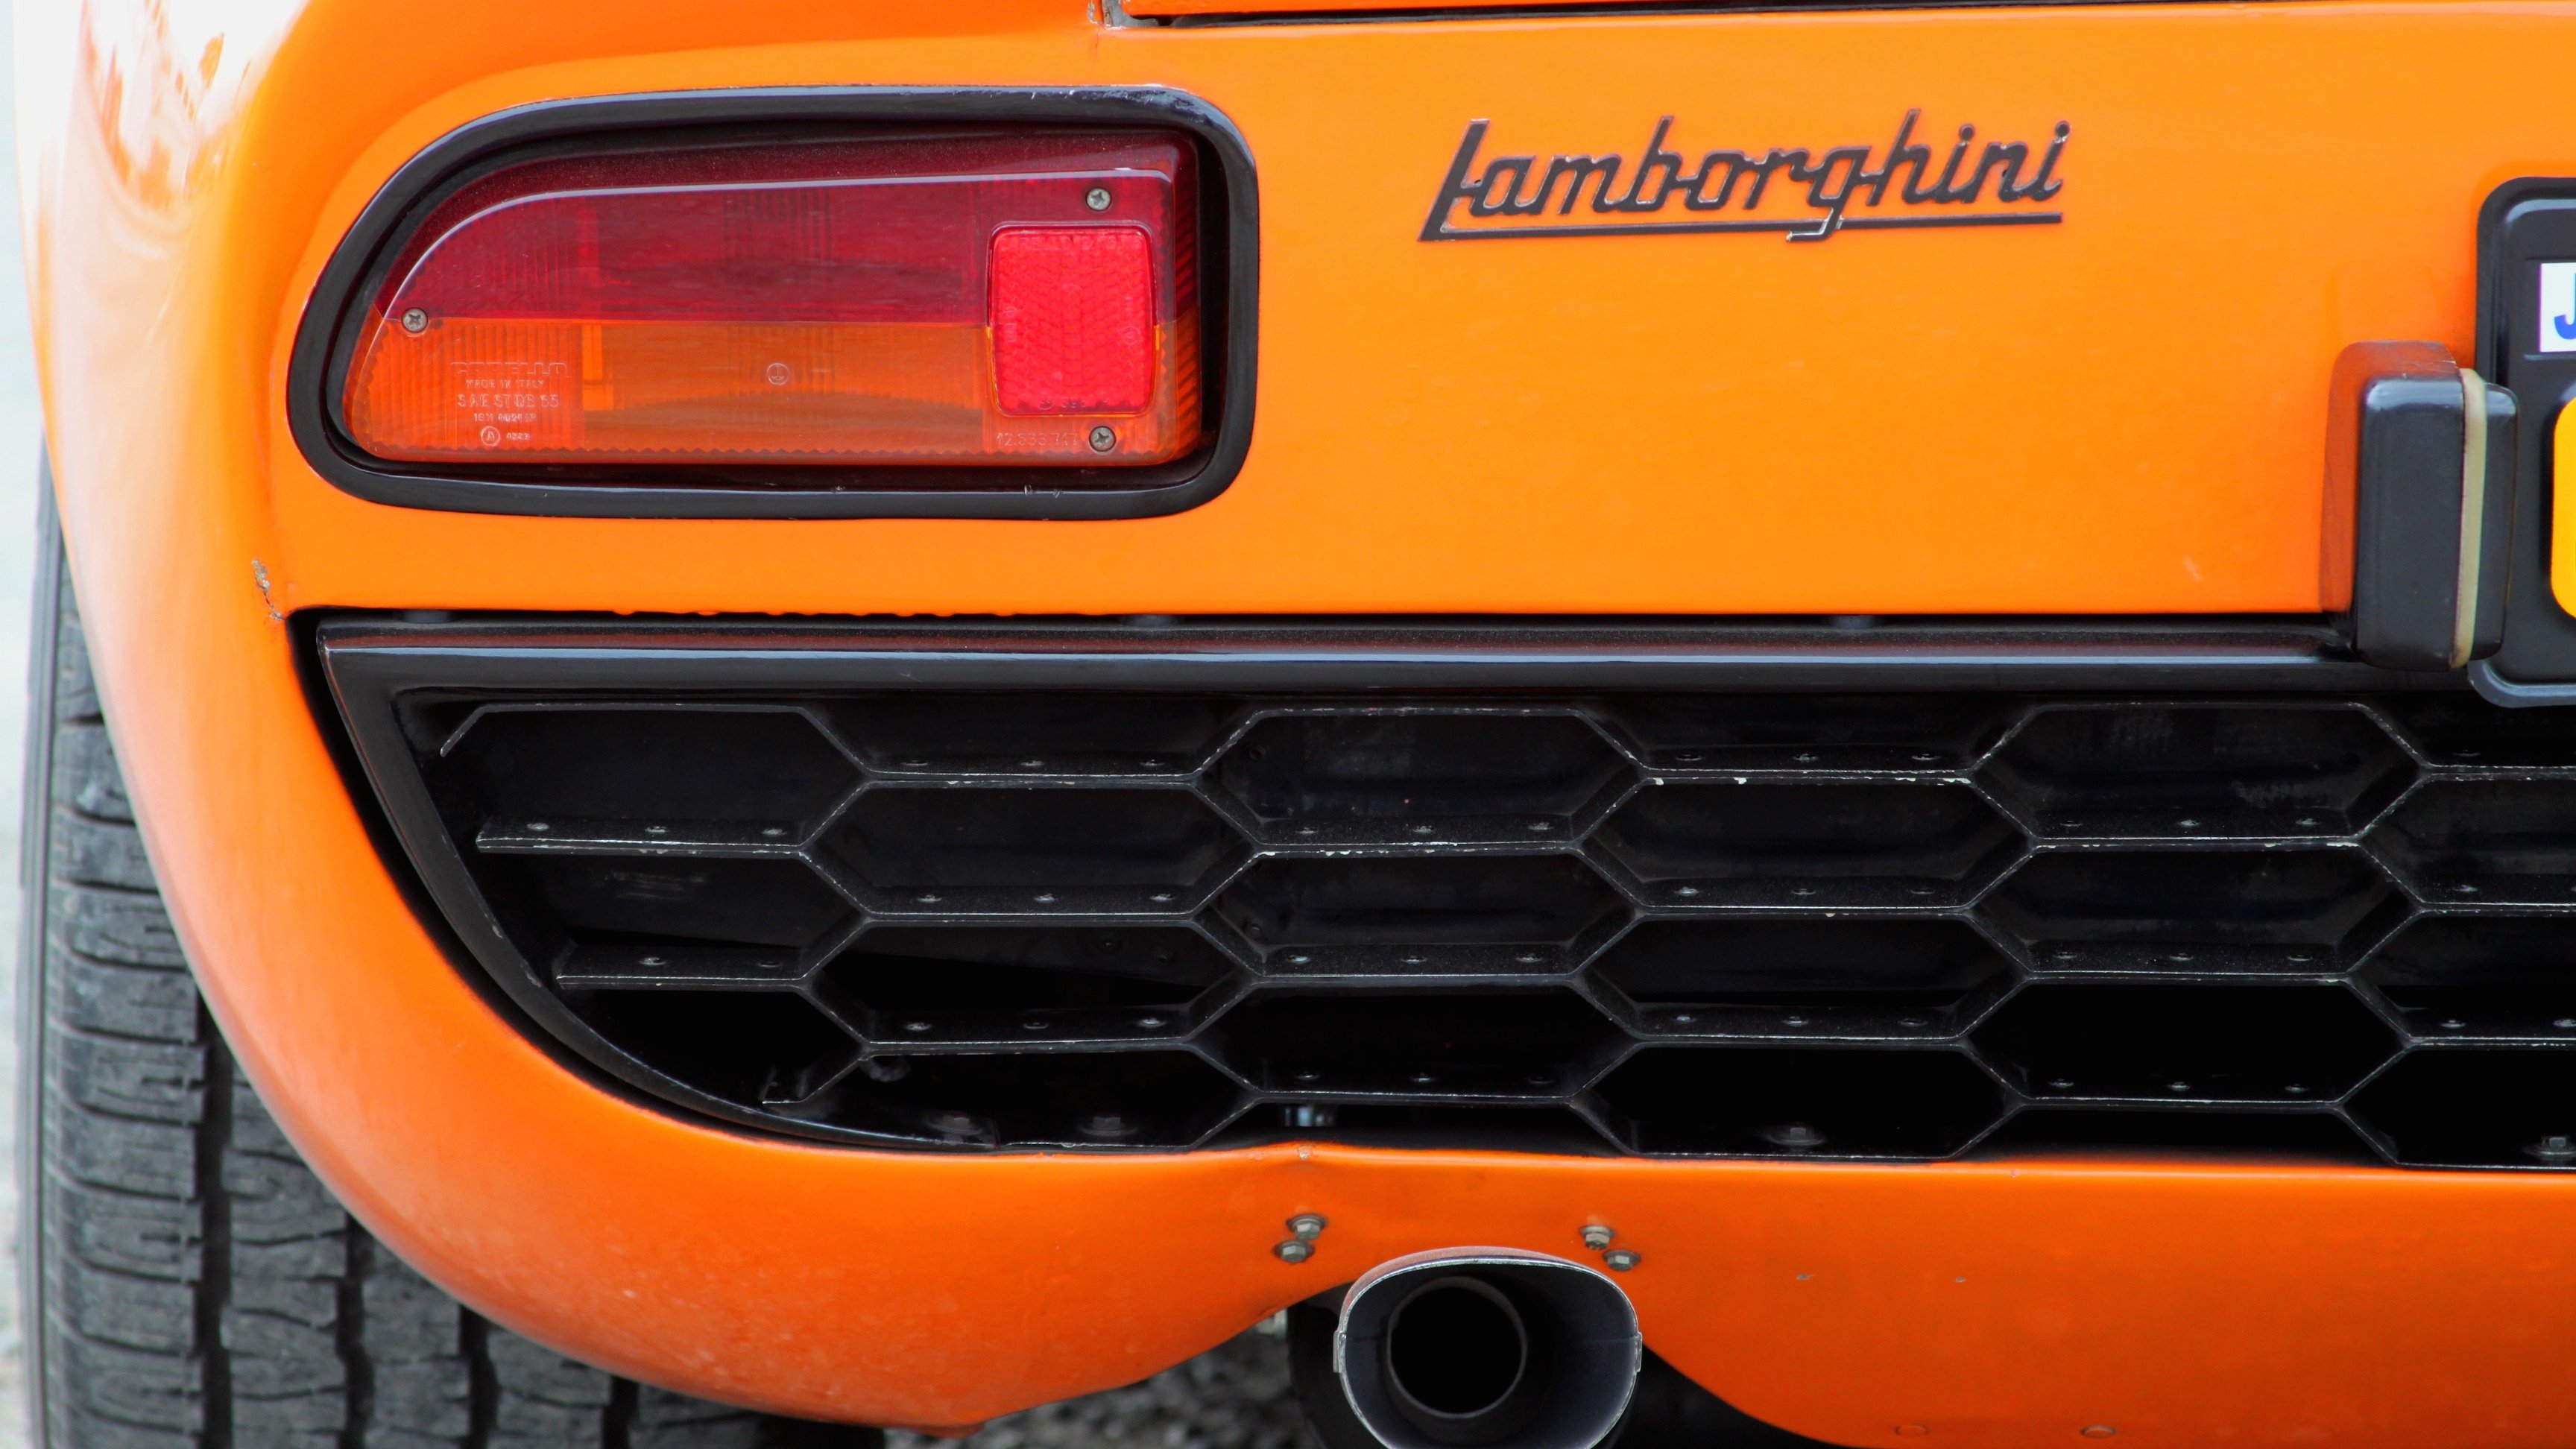 1969, Lamborghini, Miura, P400 s, Exotic, Classic, Supercar, Italy,  15 Wallpaper